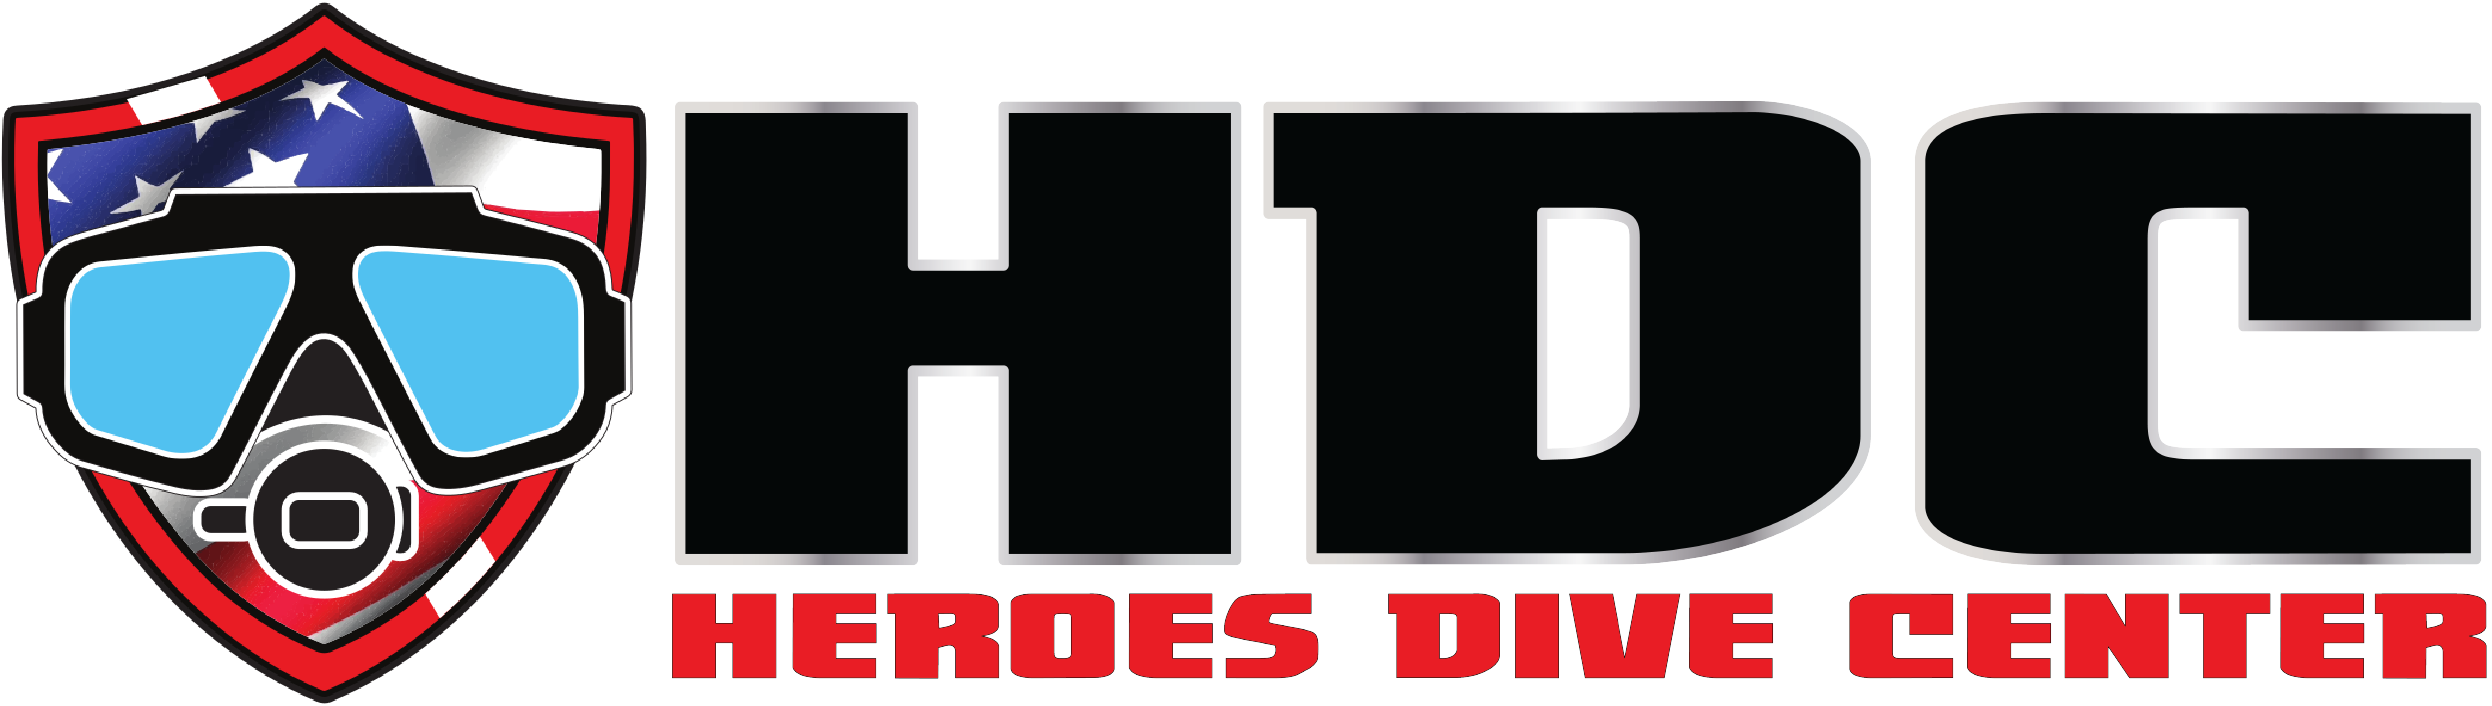 heroes dive center logo